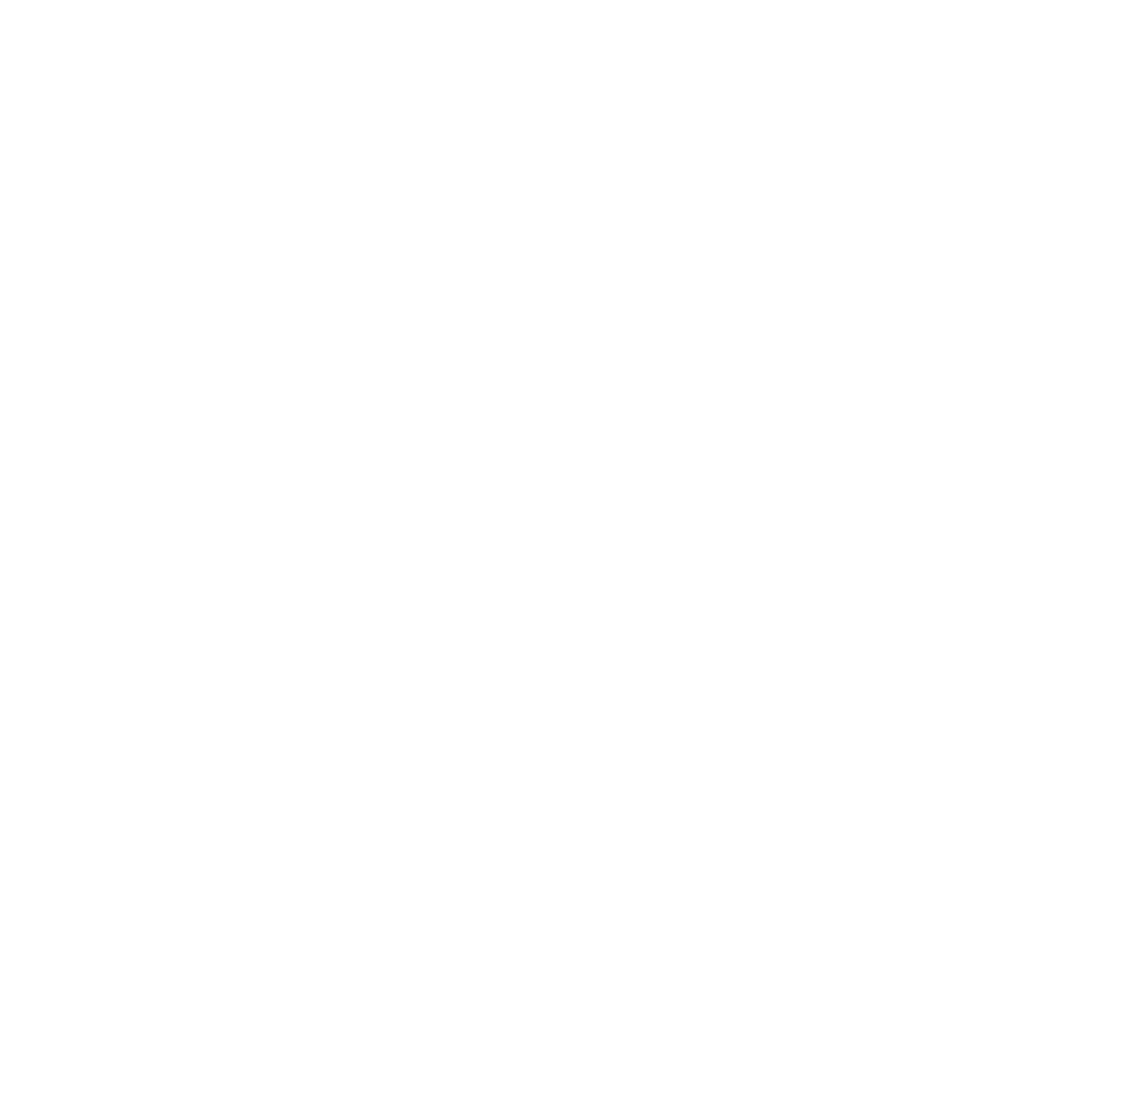 Design by Bergström